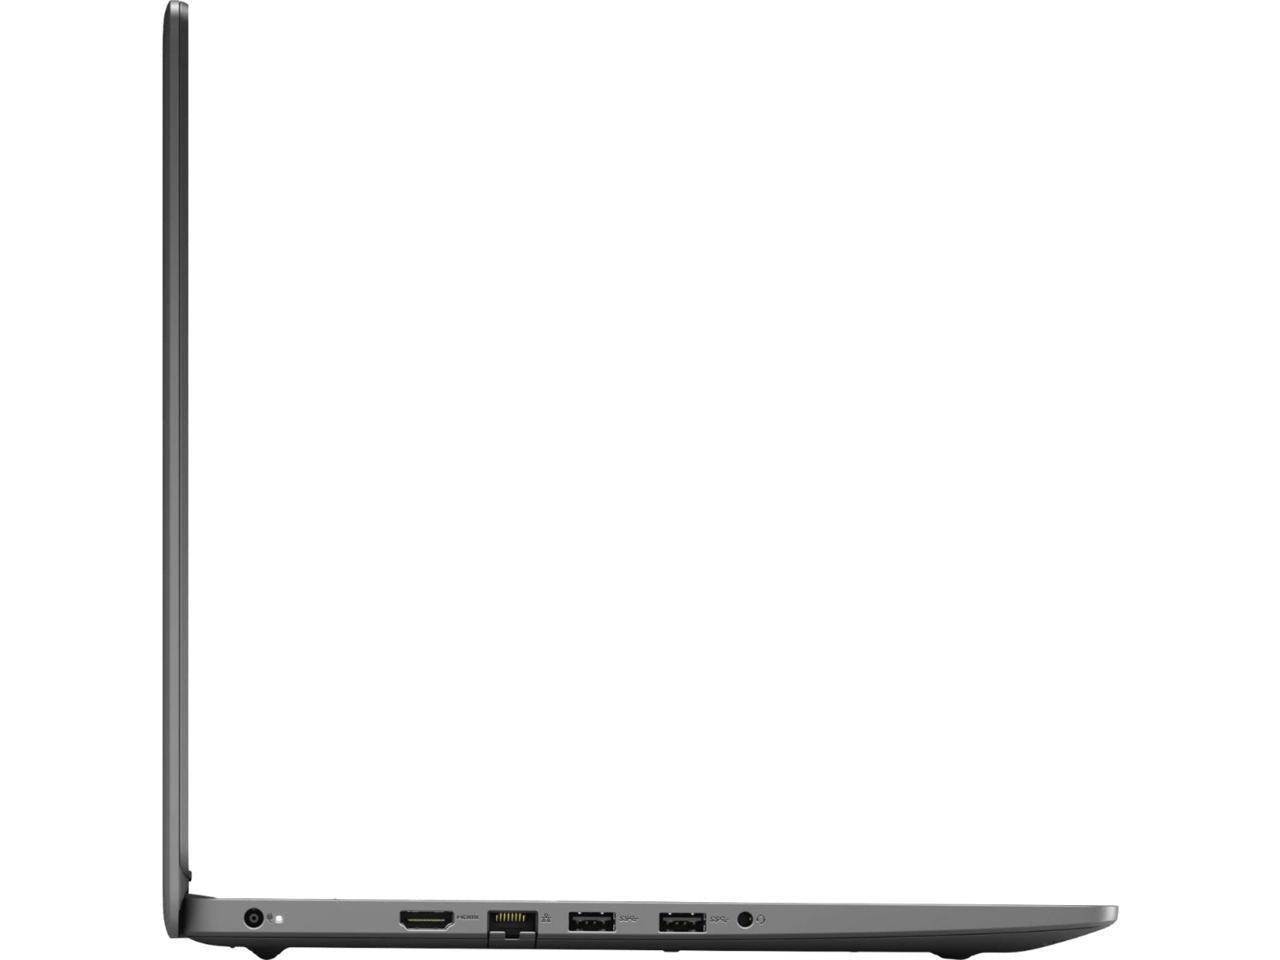 Dell Inspiron 15.6" Full Hd Touchscreen Laptop,Amd Ryzen 5 3450U Processor,16Gb Ddr4,512Gb Ssd